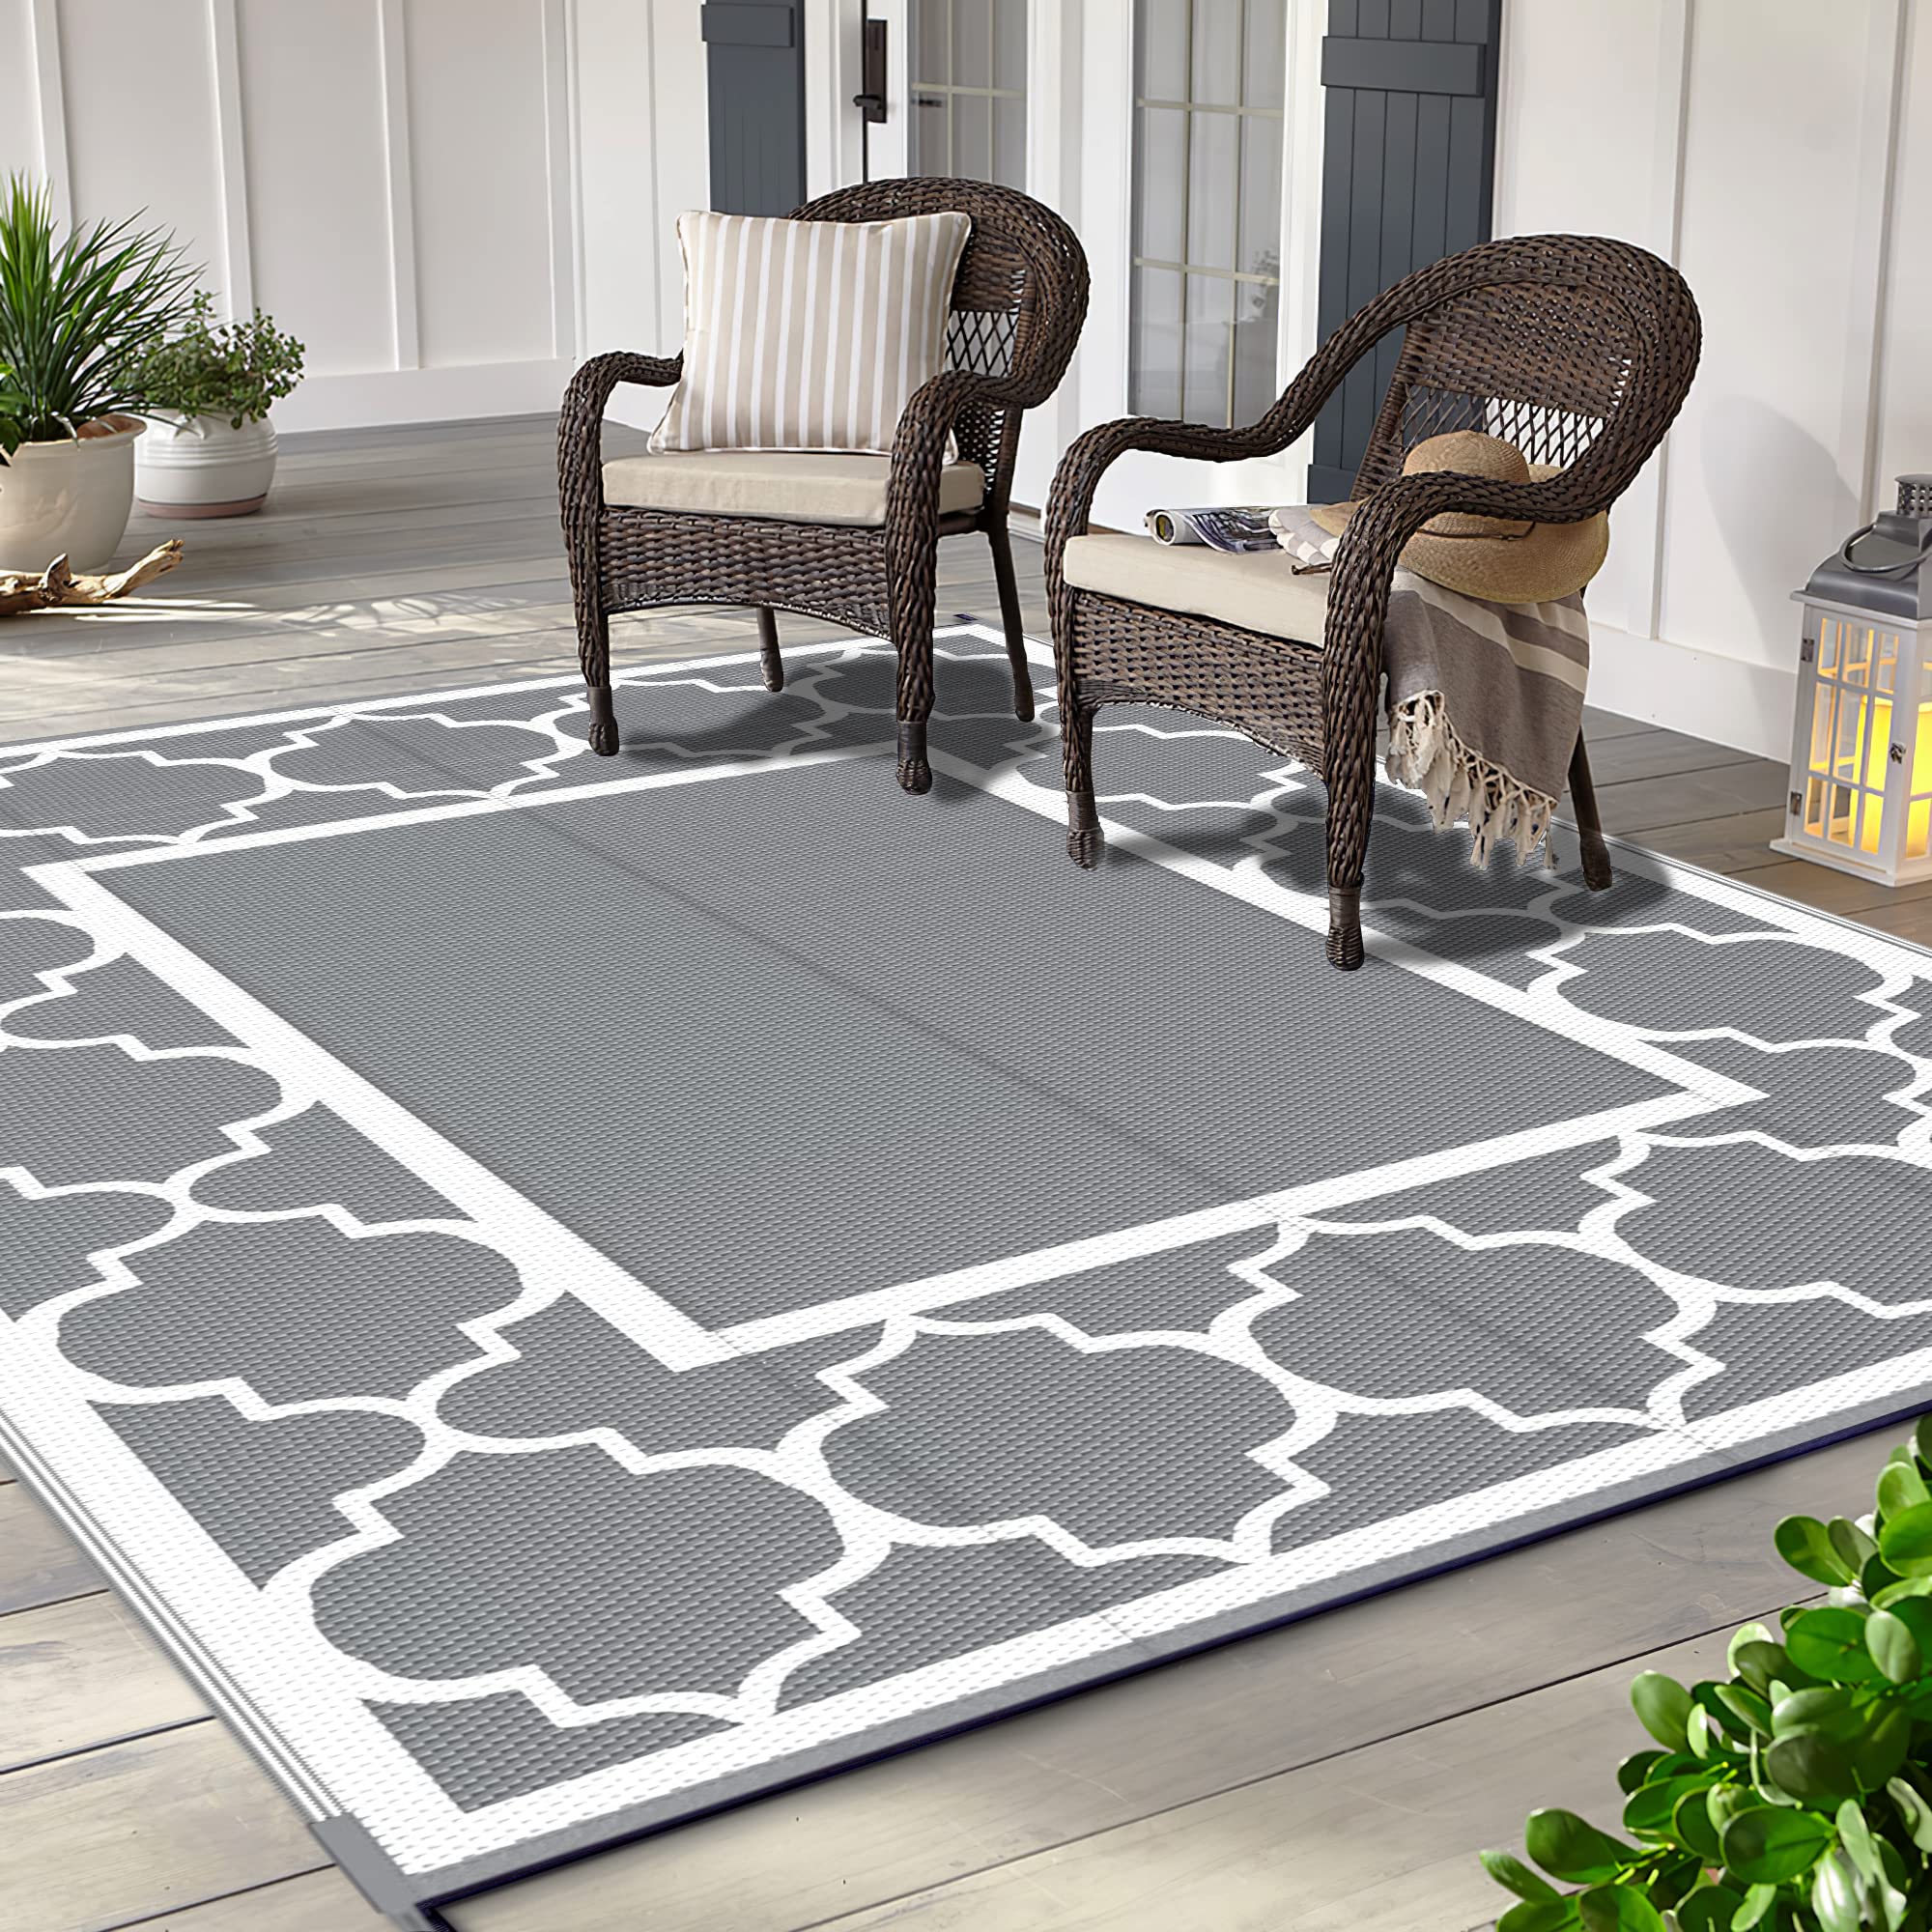 Reversible Outdoor Rug For Patio Plastic Straw Carpet Area Floor